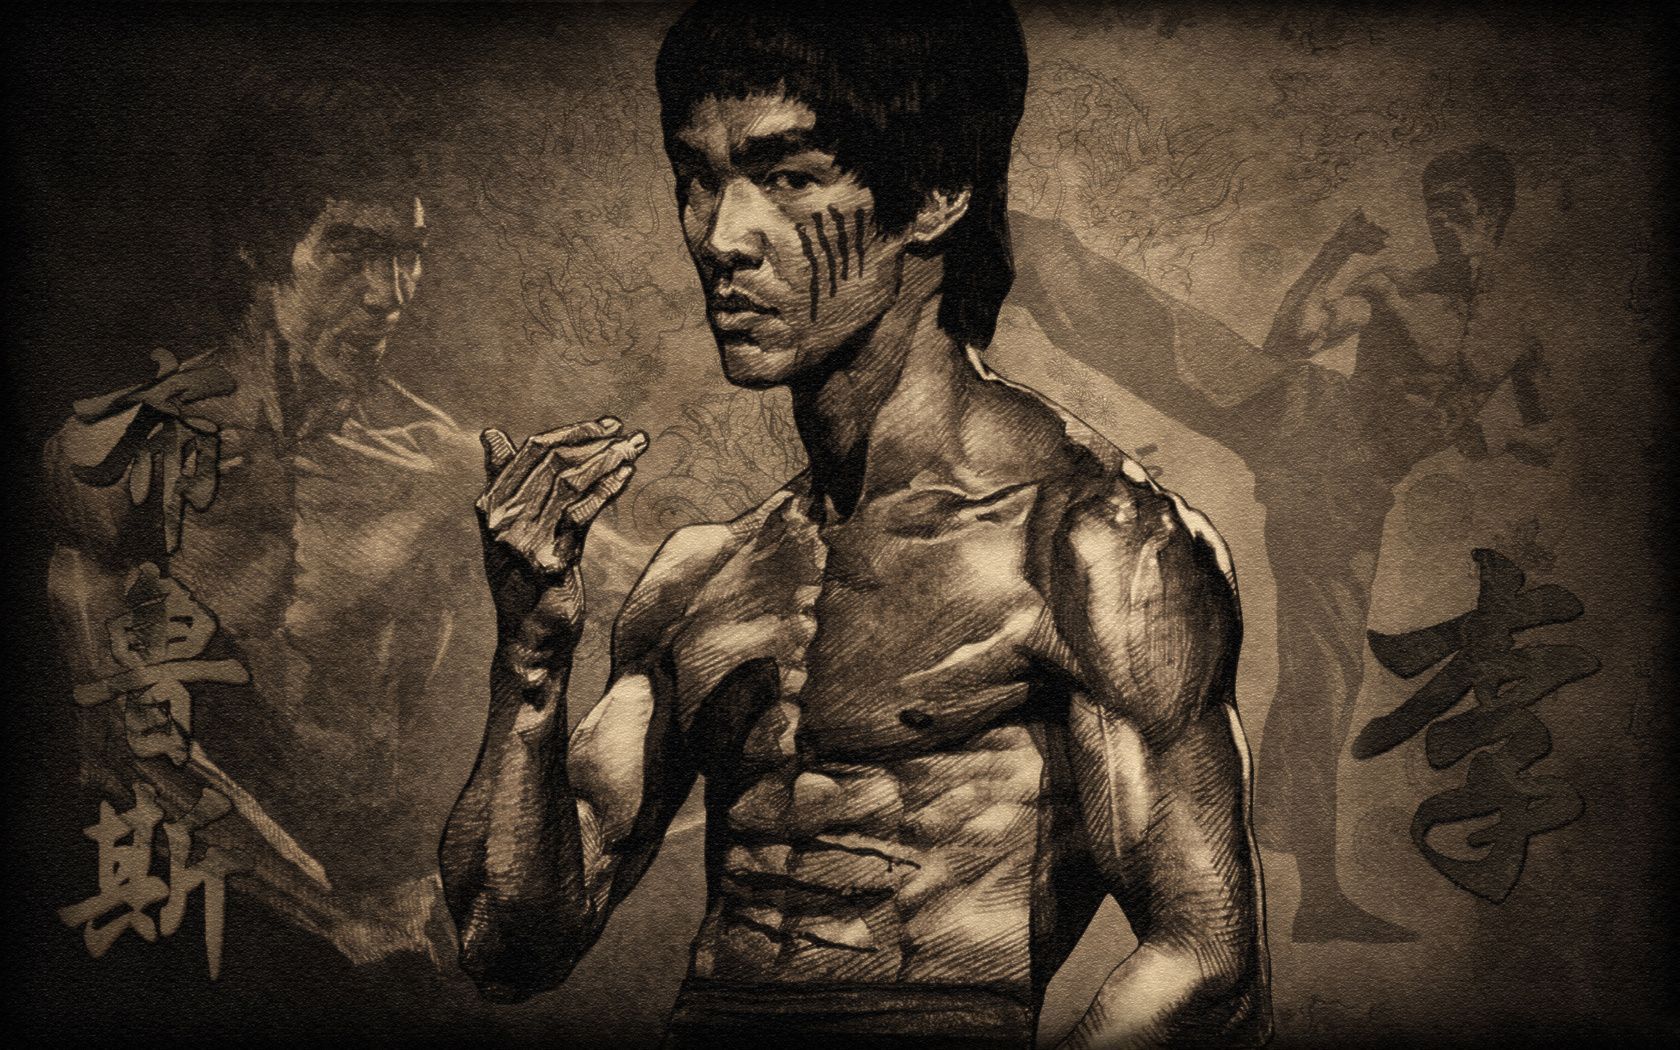 Bruce Lee martial arts, Jeet Kune Do .com